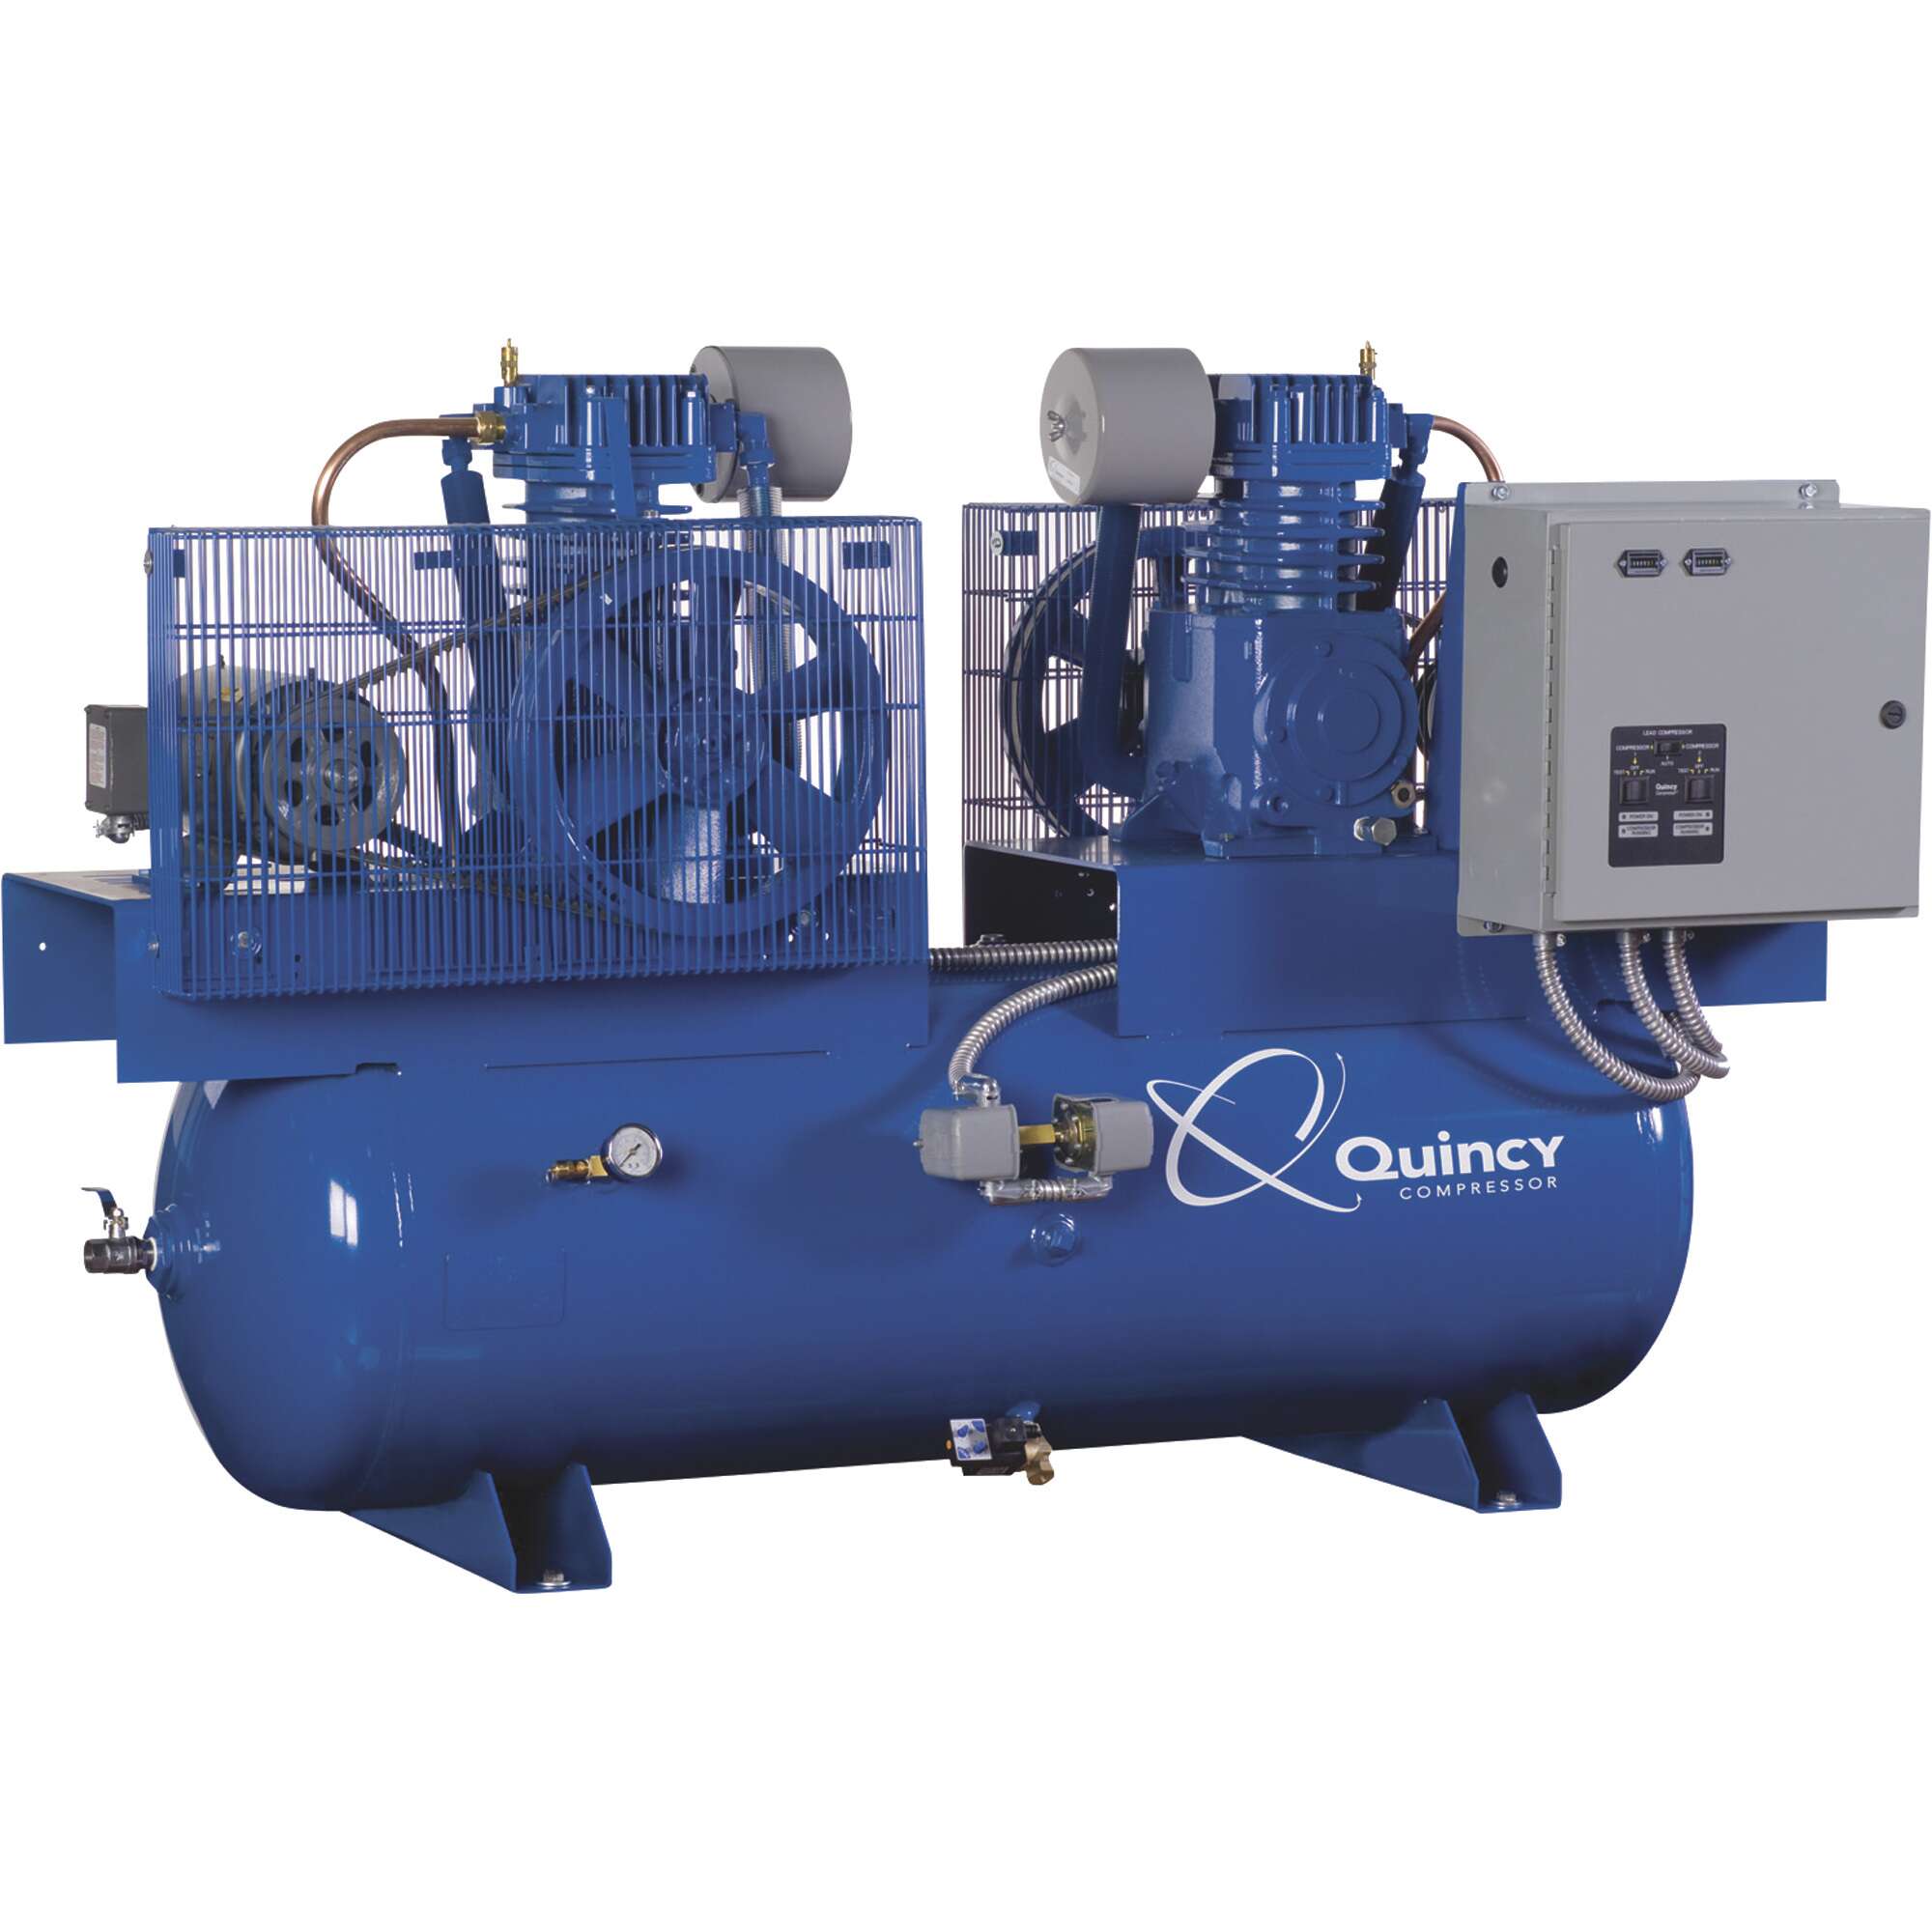 Quincy Duplex Air Compressor 7.5 HP 230 Volt 1 Phase 120 Gallon Horizontal